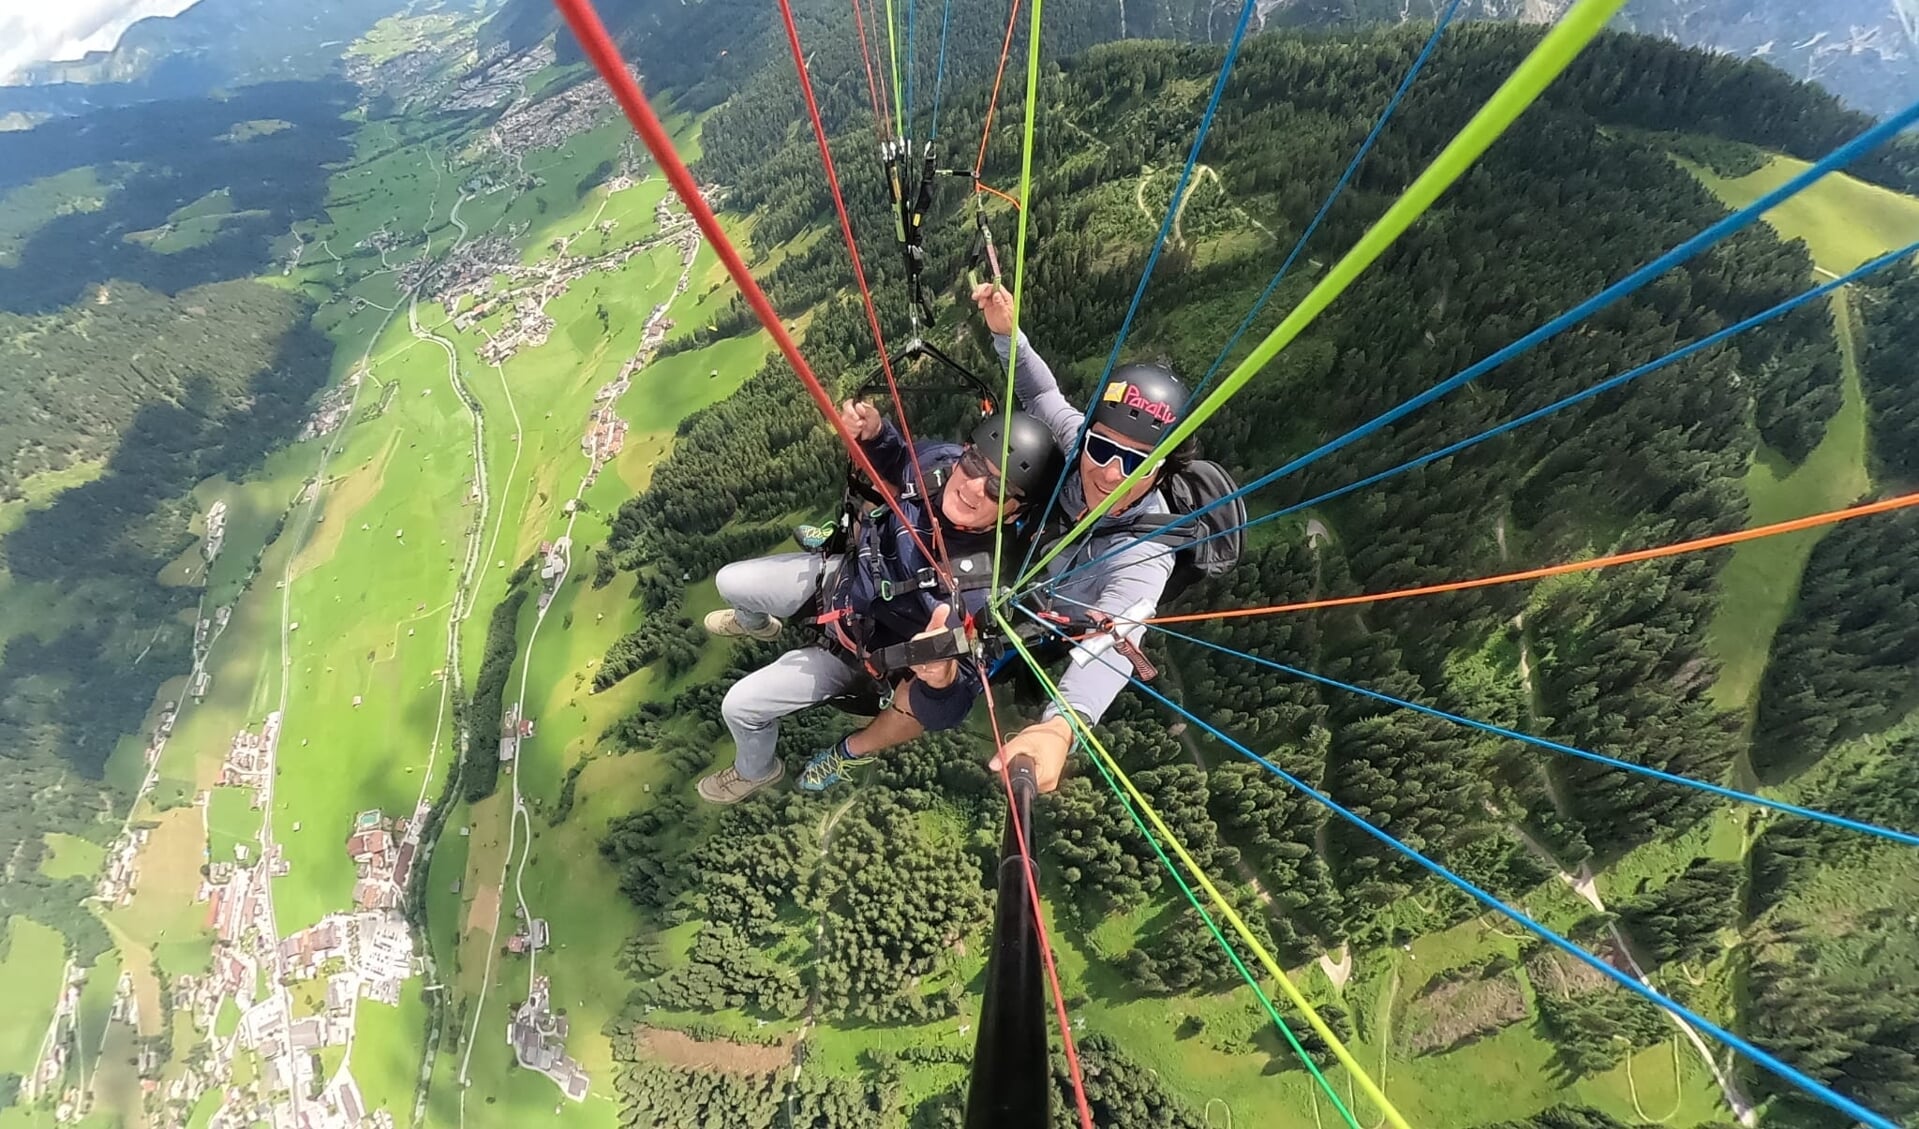 Paragliding vanaf een 1850 meter hoge berg.